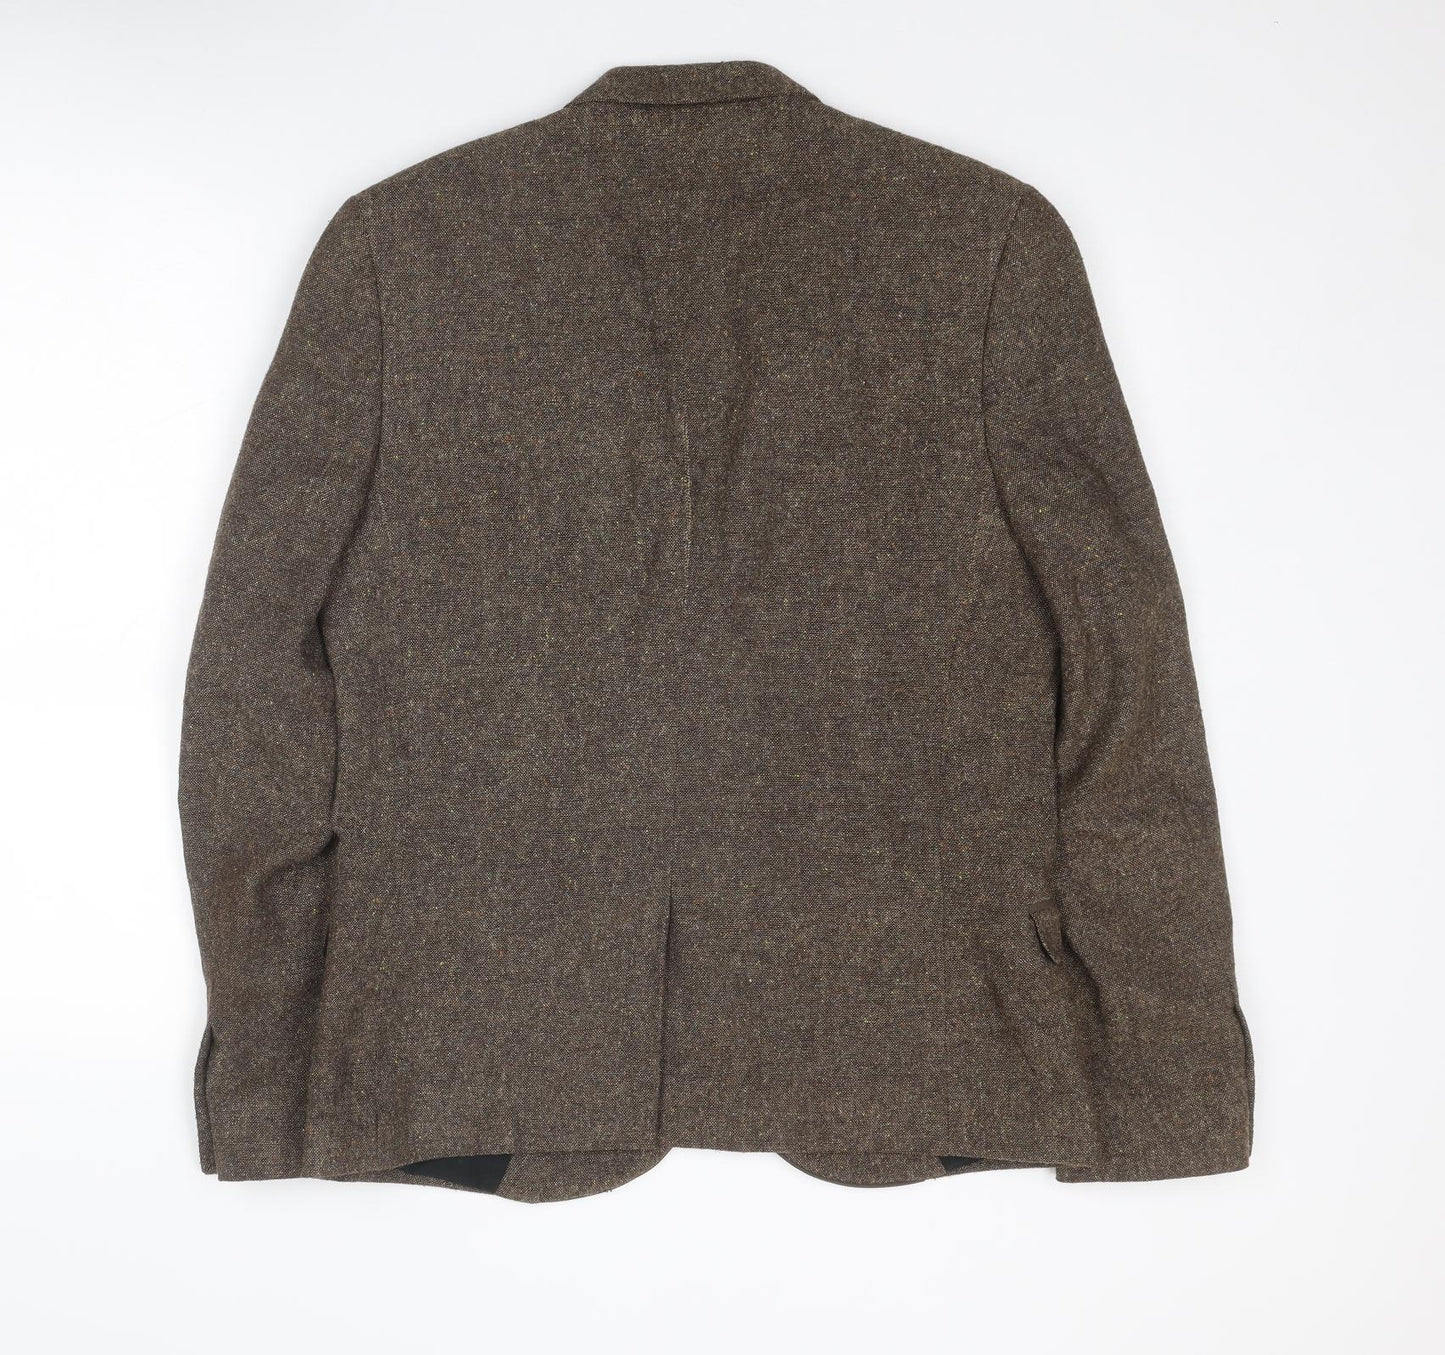 Topman Mens Brown Polyester Jacket Blazer Size 40 Regular